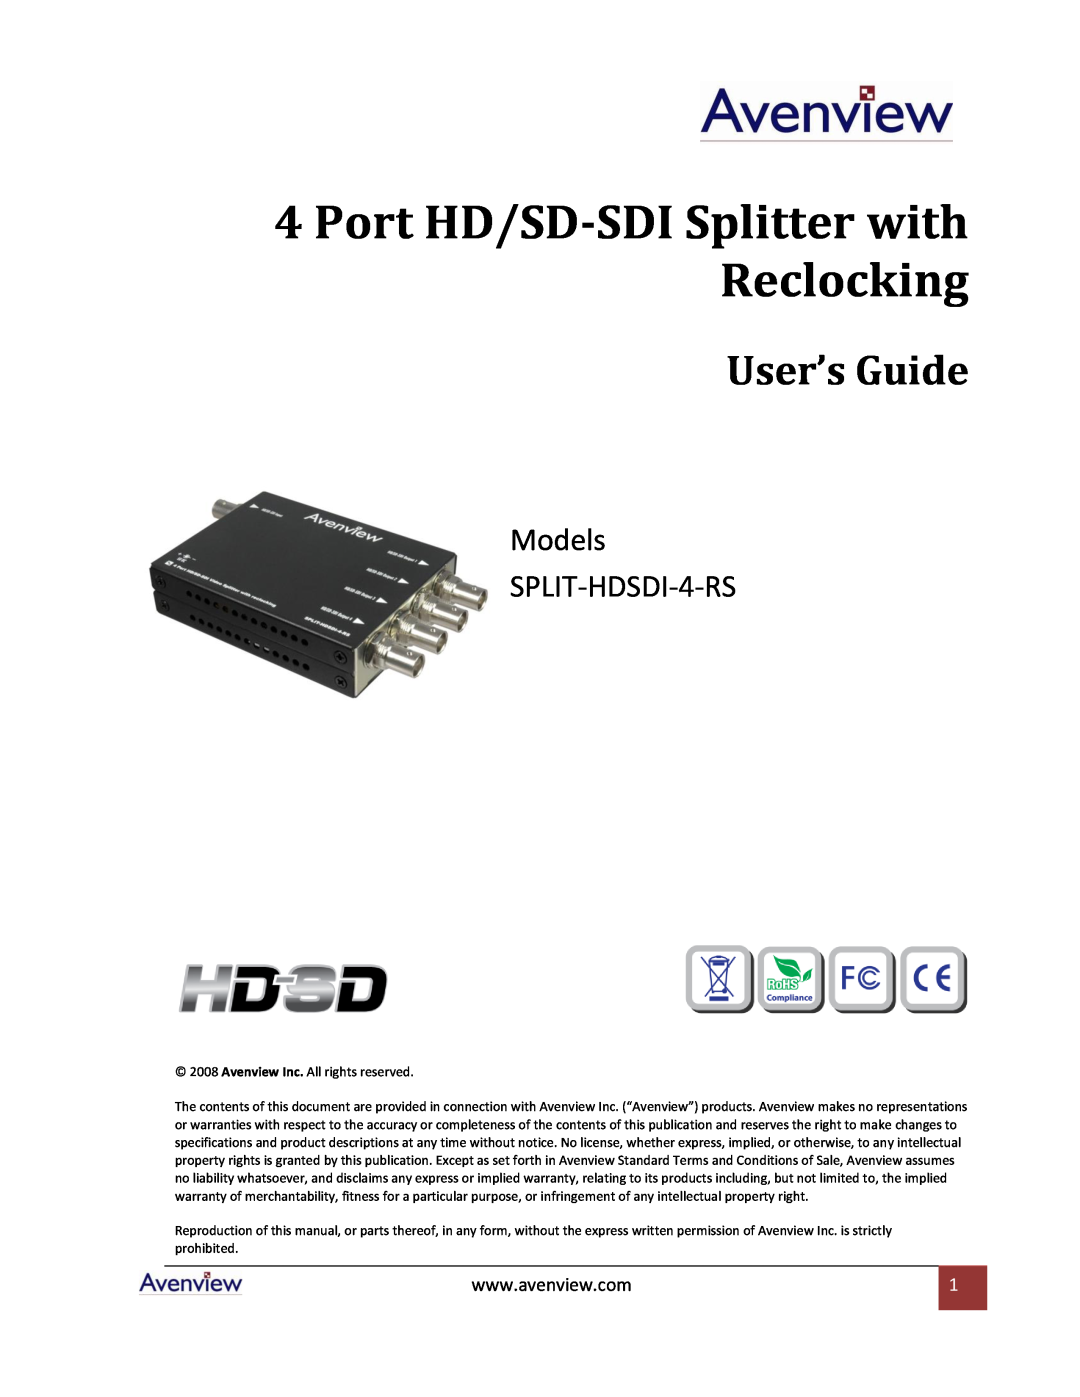 Avenview specifications Port HD/SD-SDI Splitter with Reclocking, User’s Guide, Models SPLIT-HDSDI-4-RS 